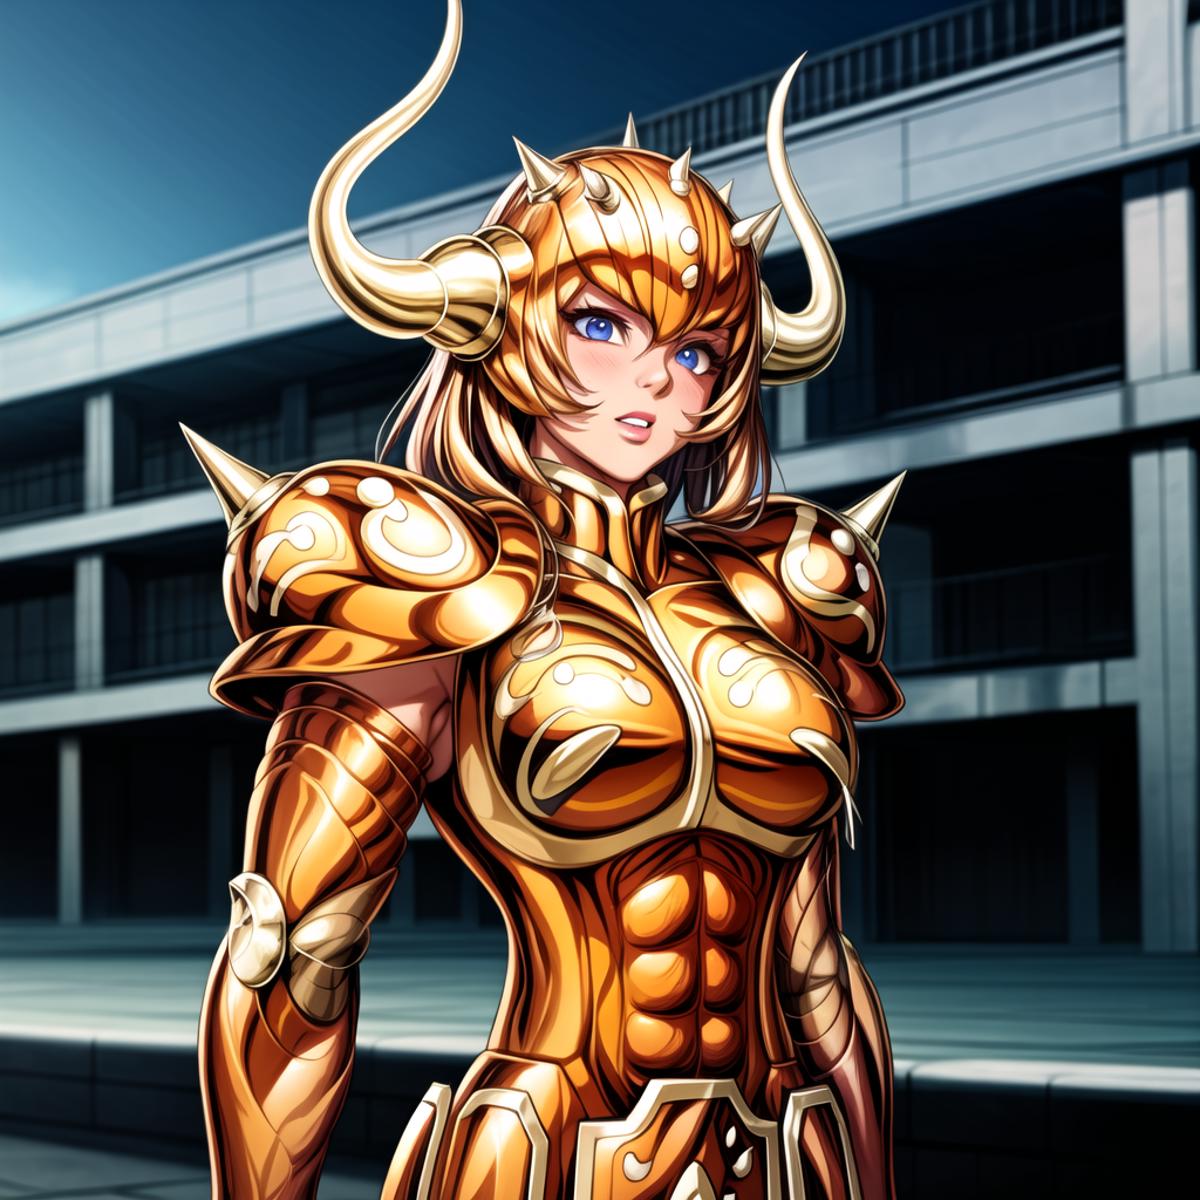 Saint Seiya Taurus Armor image by Musicxp